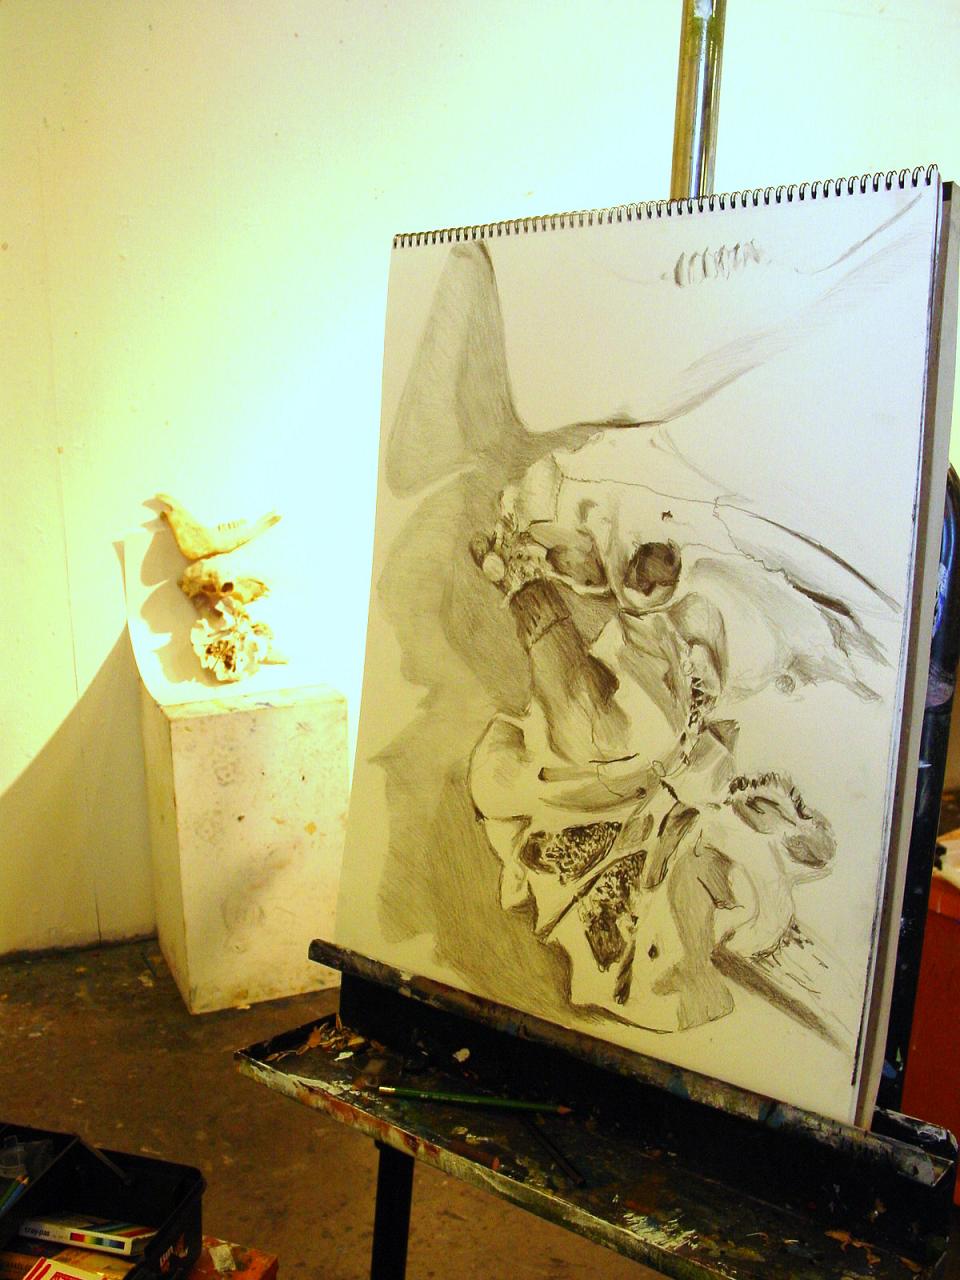 Bones Still Life, pencil on paper, 18x24 inches, Jessica Siemens 2009